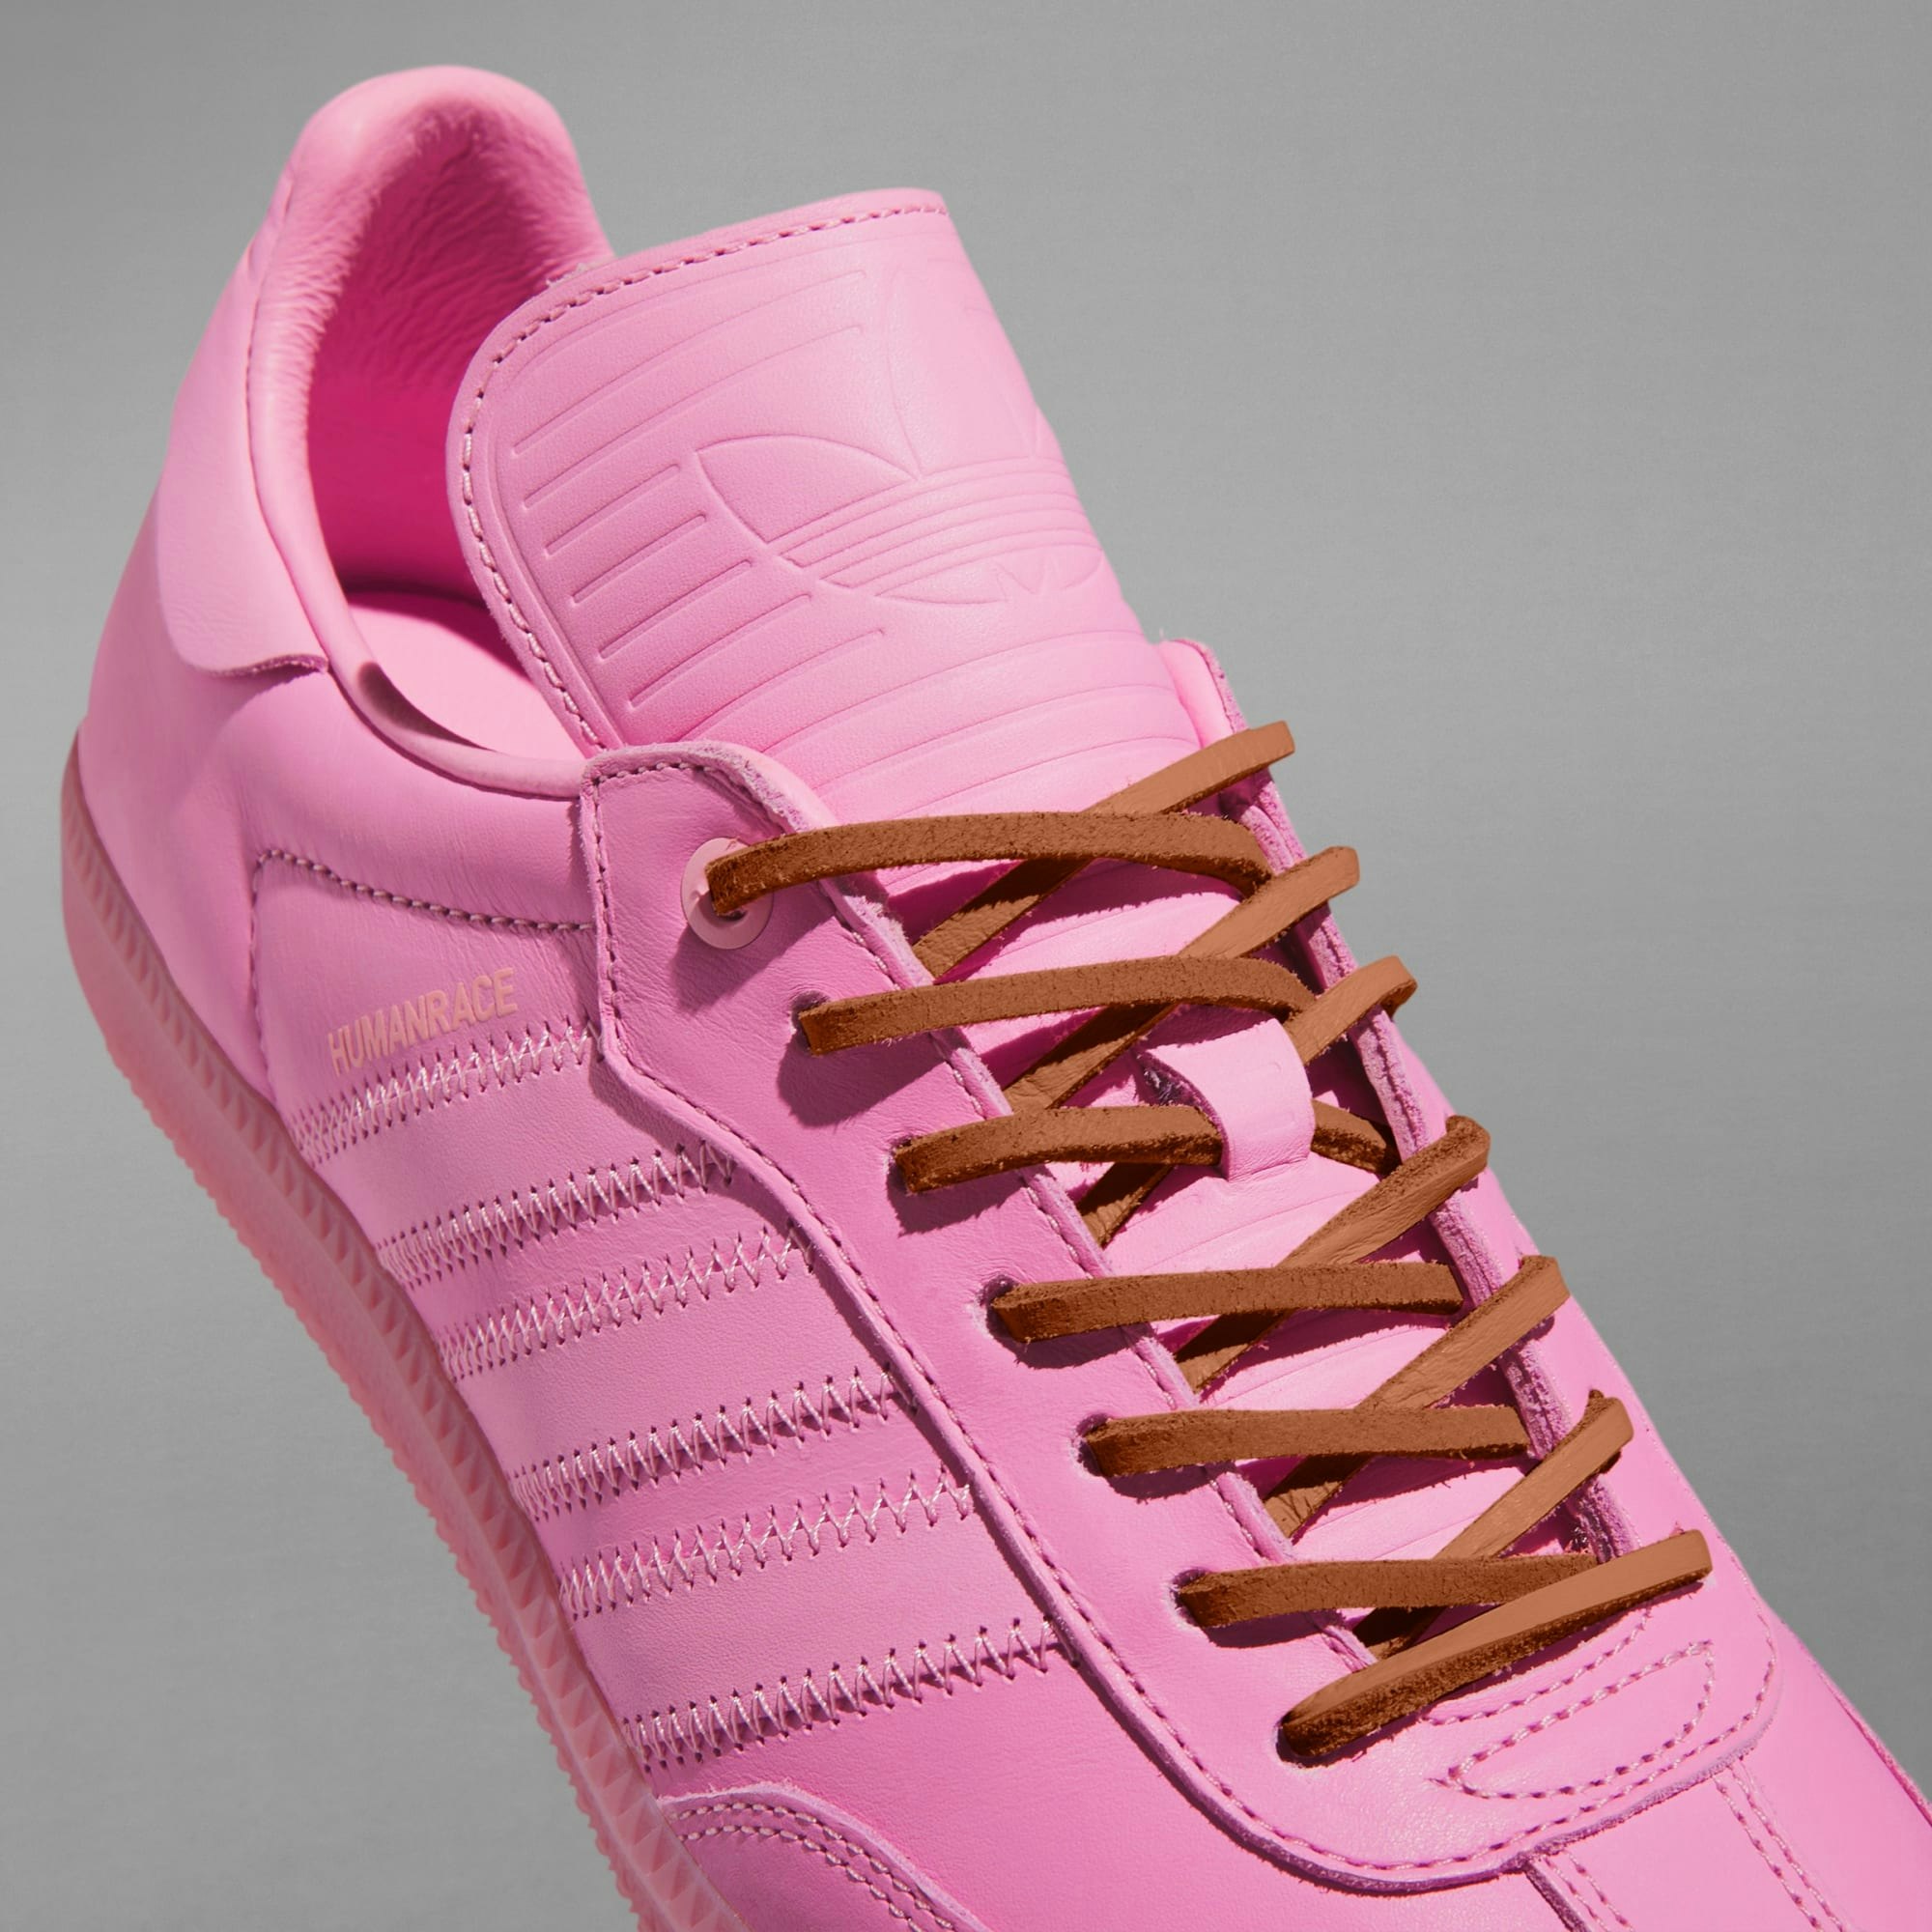 Pharrell Williams x adidas Samba "Humanrace" (Pink)